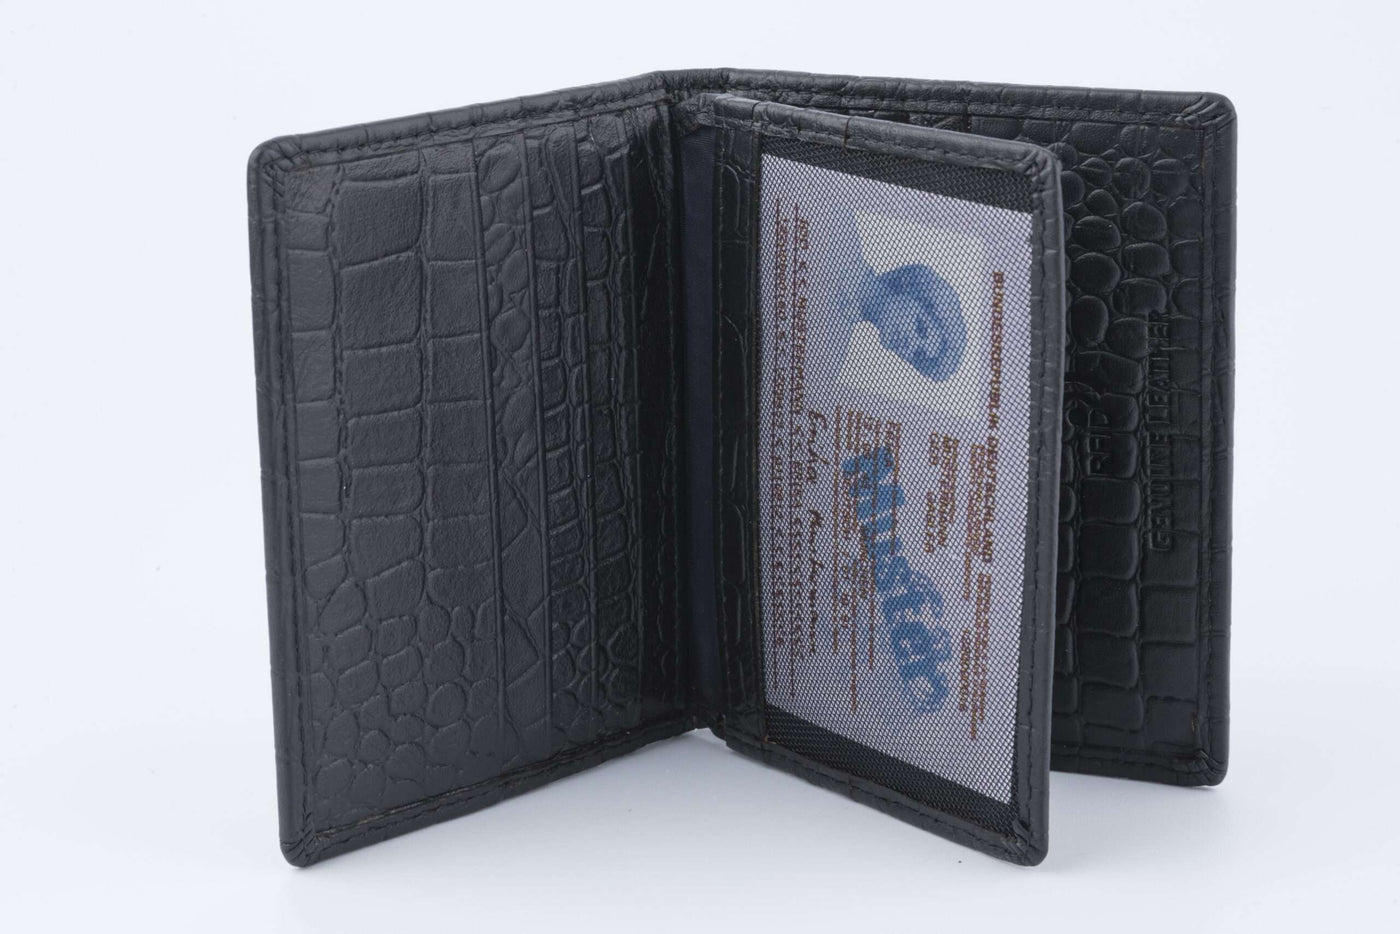 personalized-card-holder-wallet-croc-impression.jpg